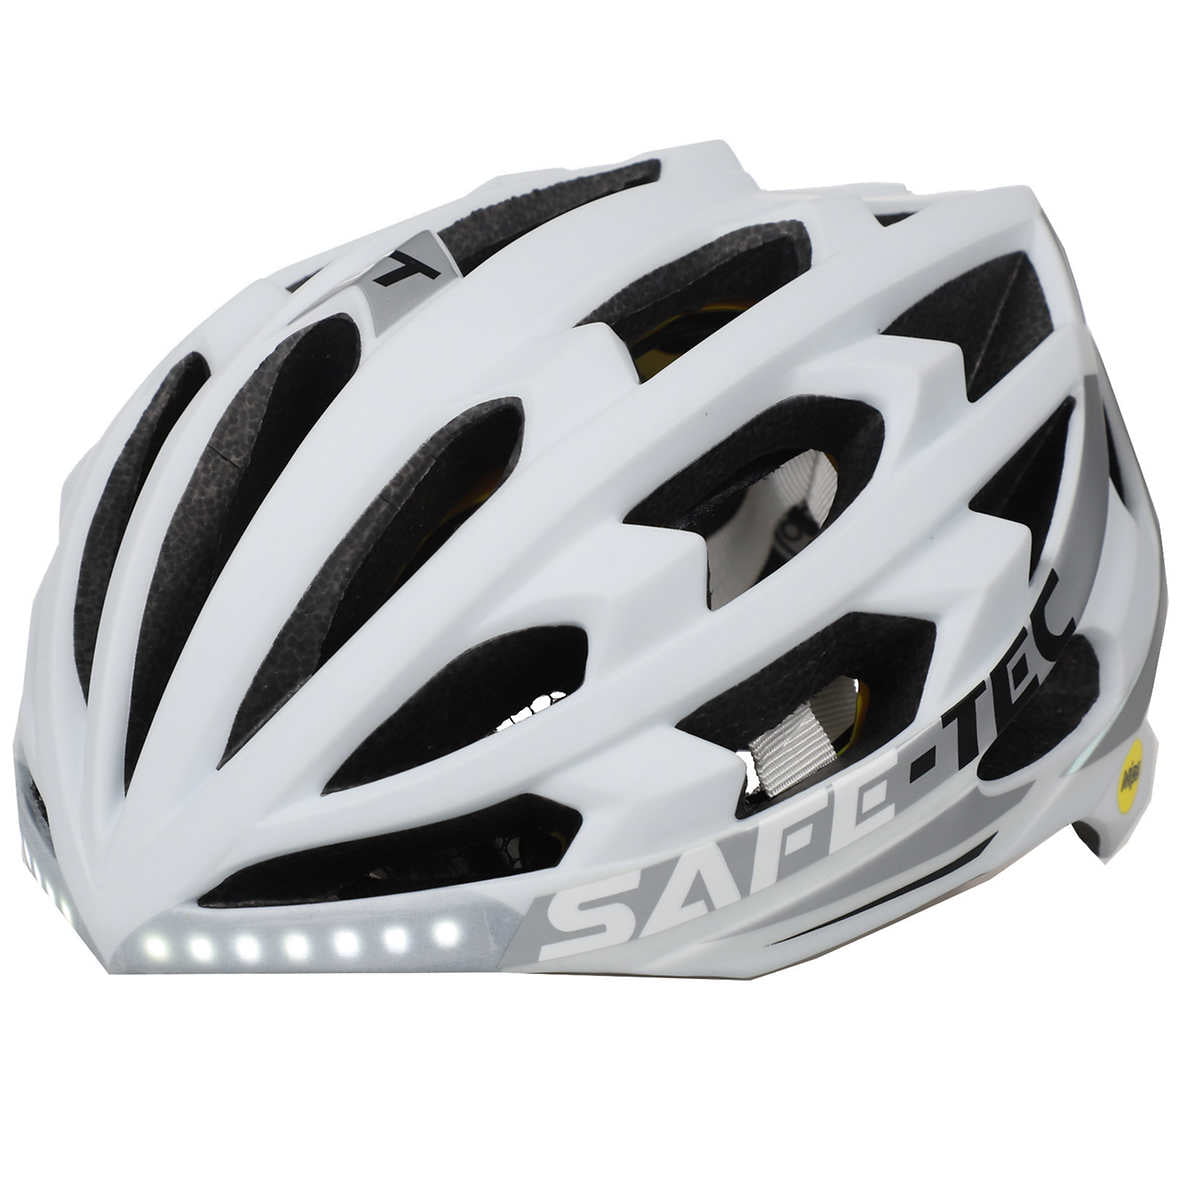 Details about   Safe-Tec Smart Helmet 